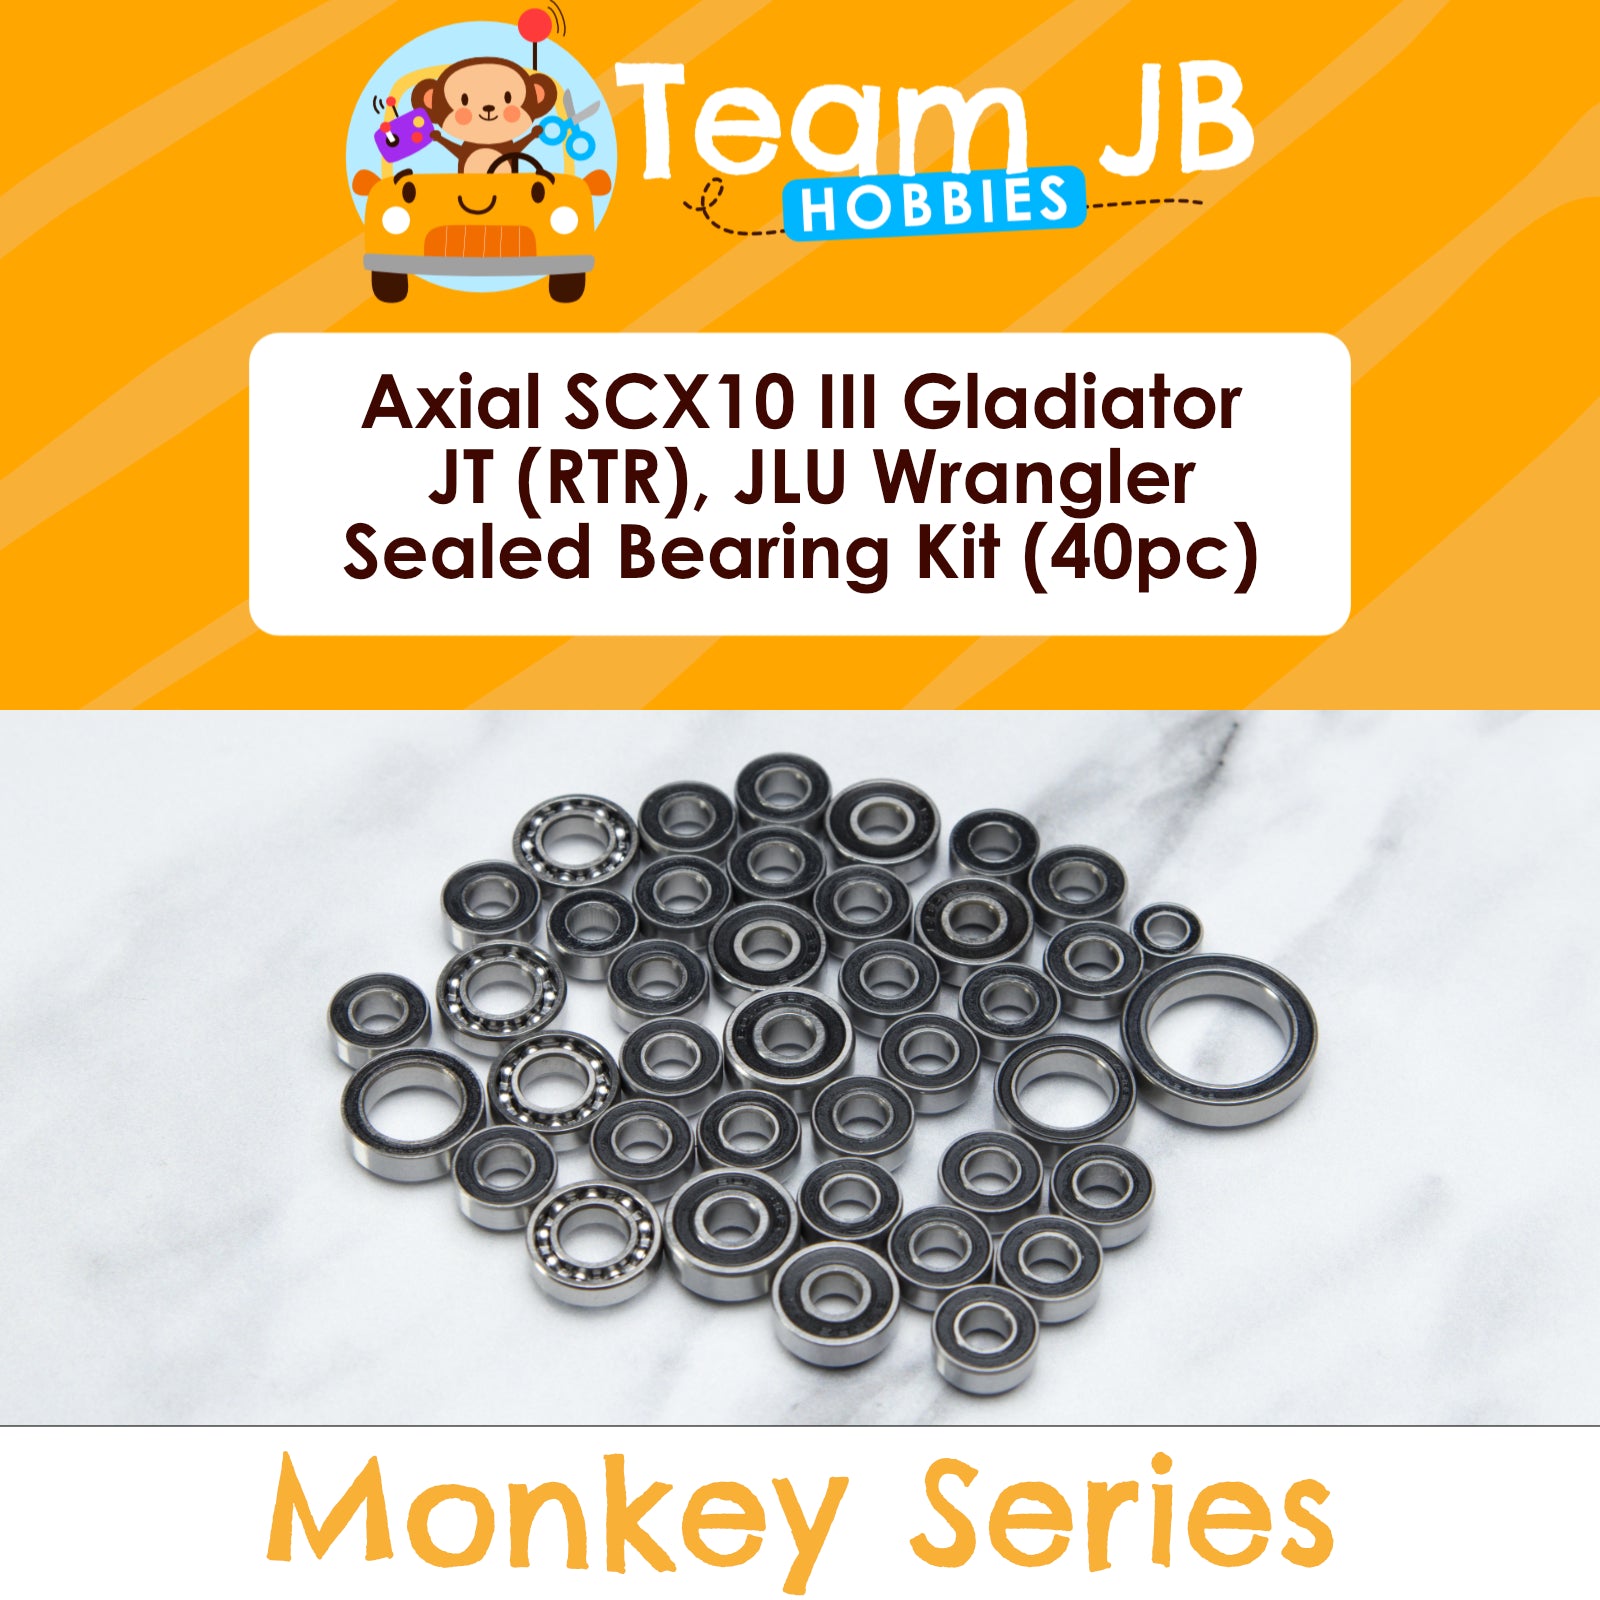 Axial SCX10 III Gladiator JT (RTR), JLU Wrangler (Kit/RTR) - Sealed Bearing Kit